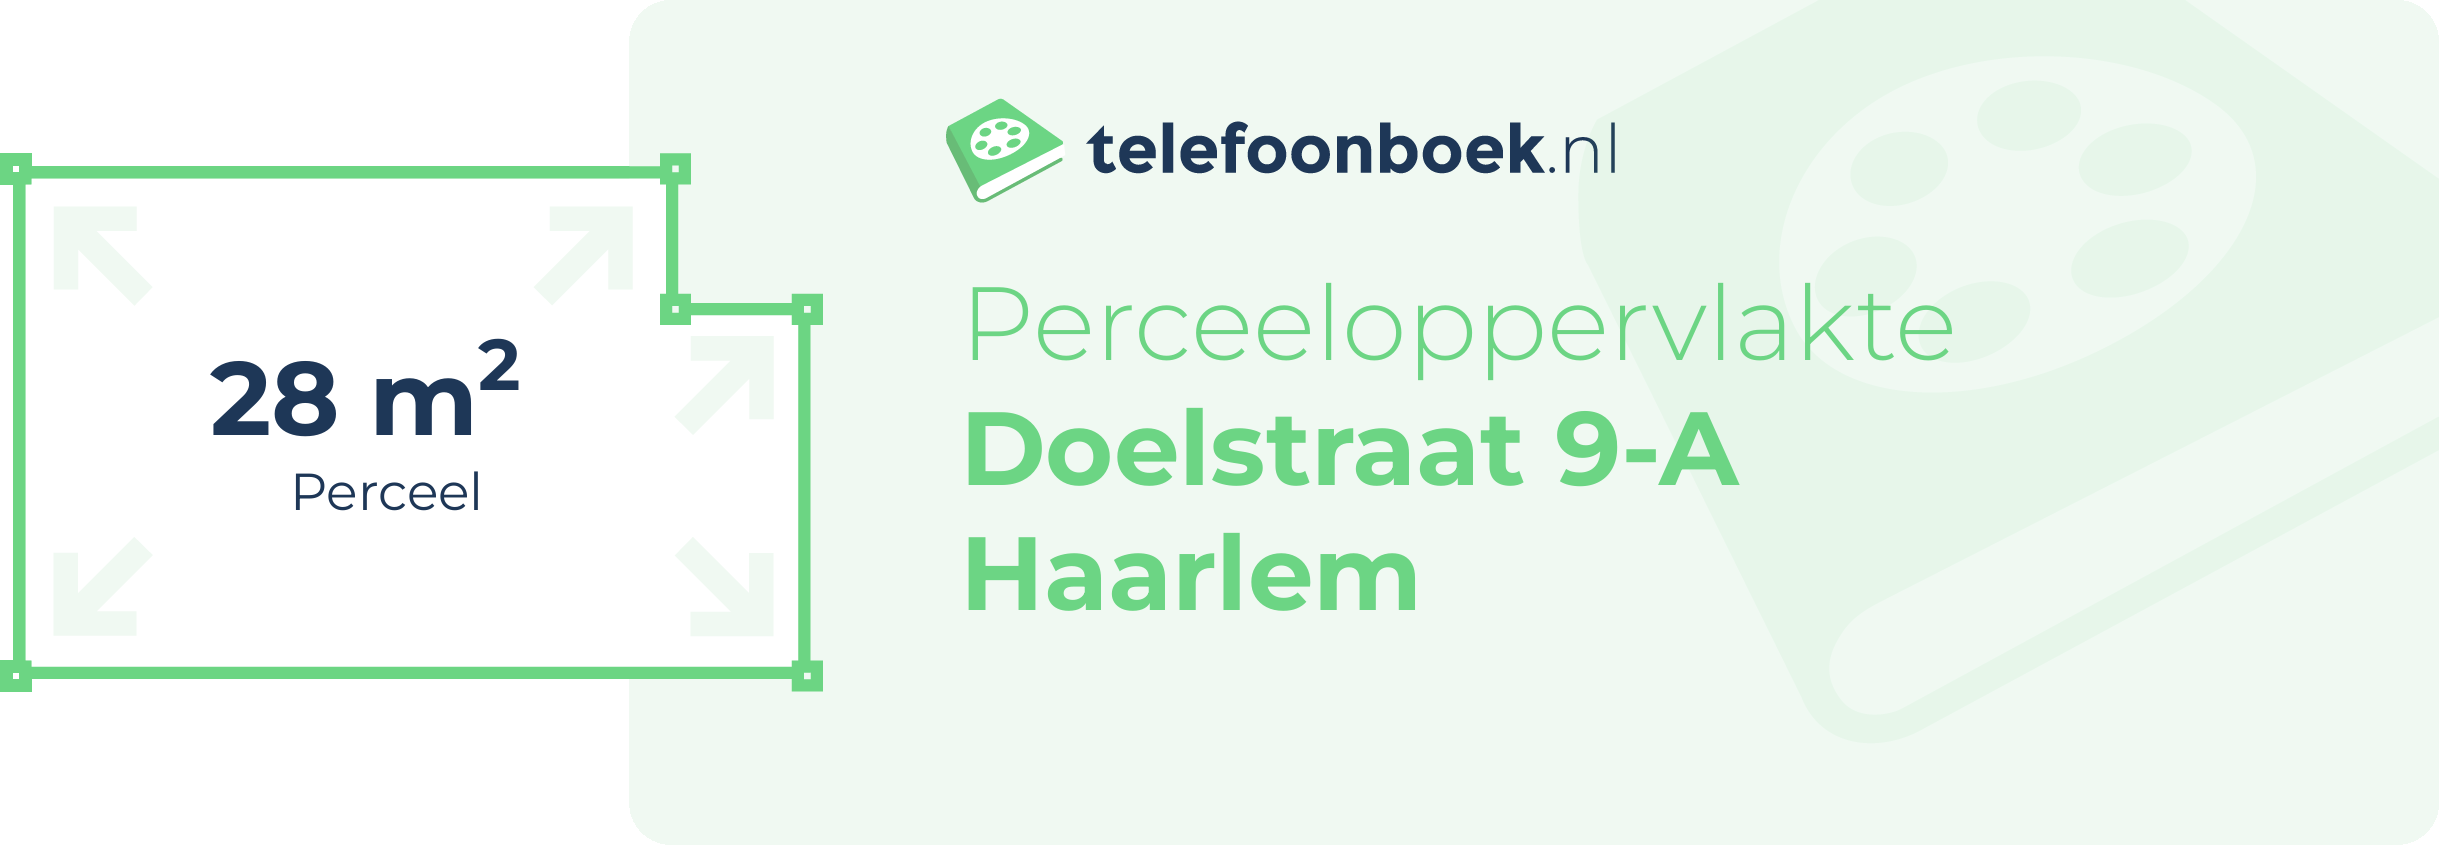 Perceeloppervlakte Doelstraat 9-A Haarlem